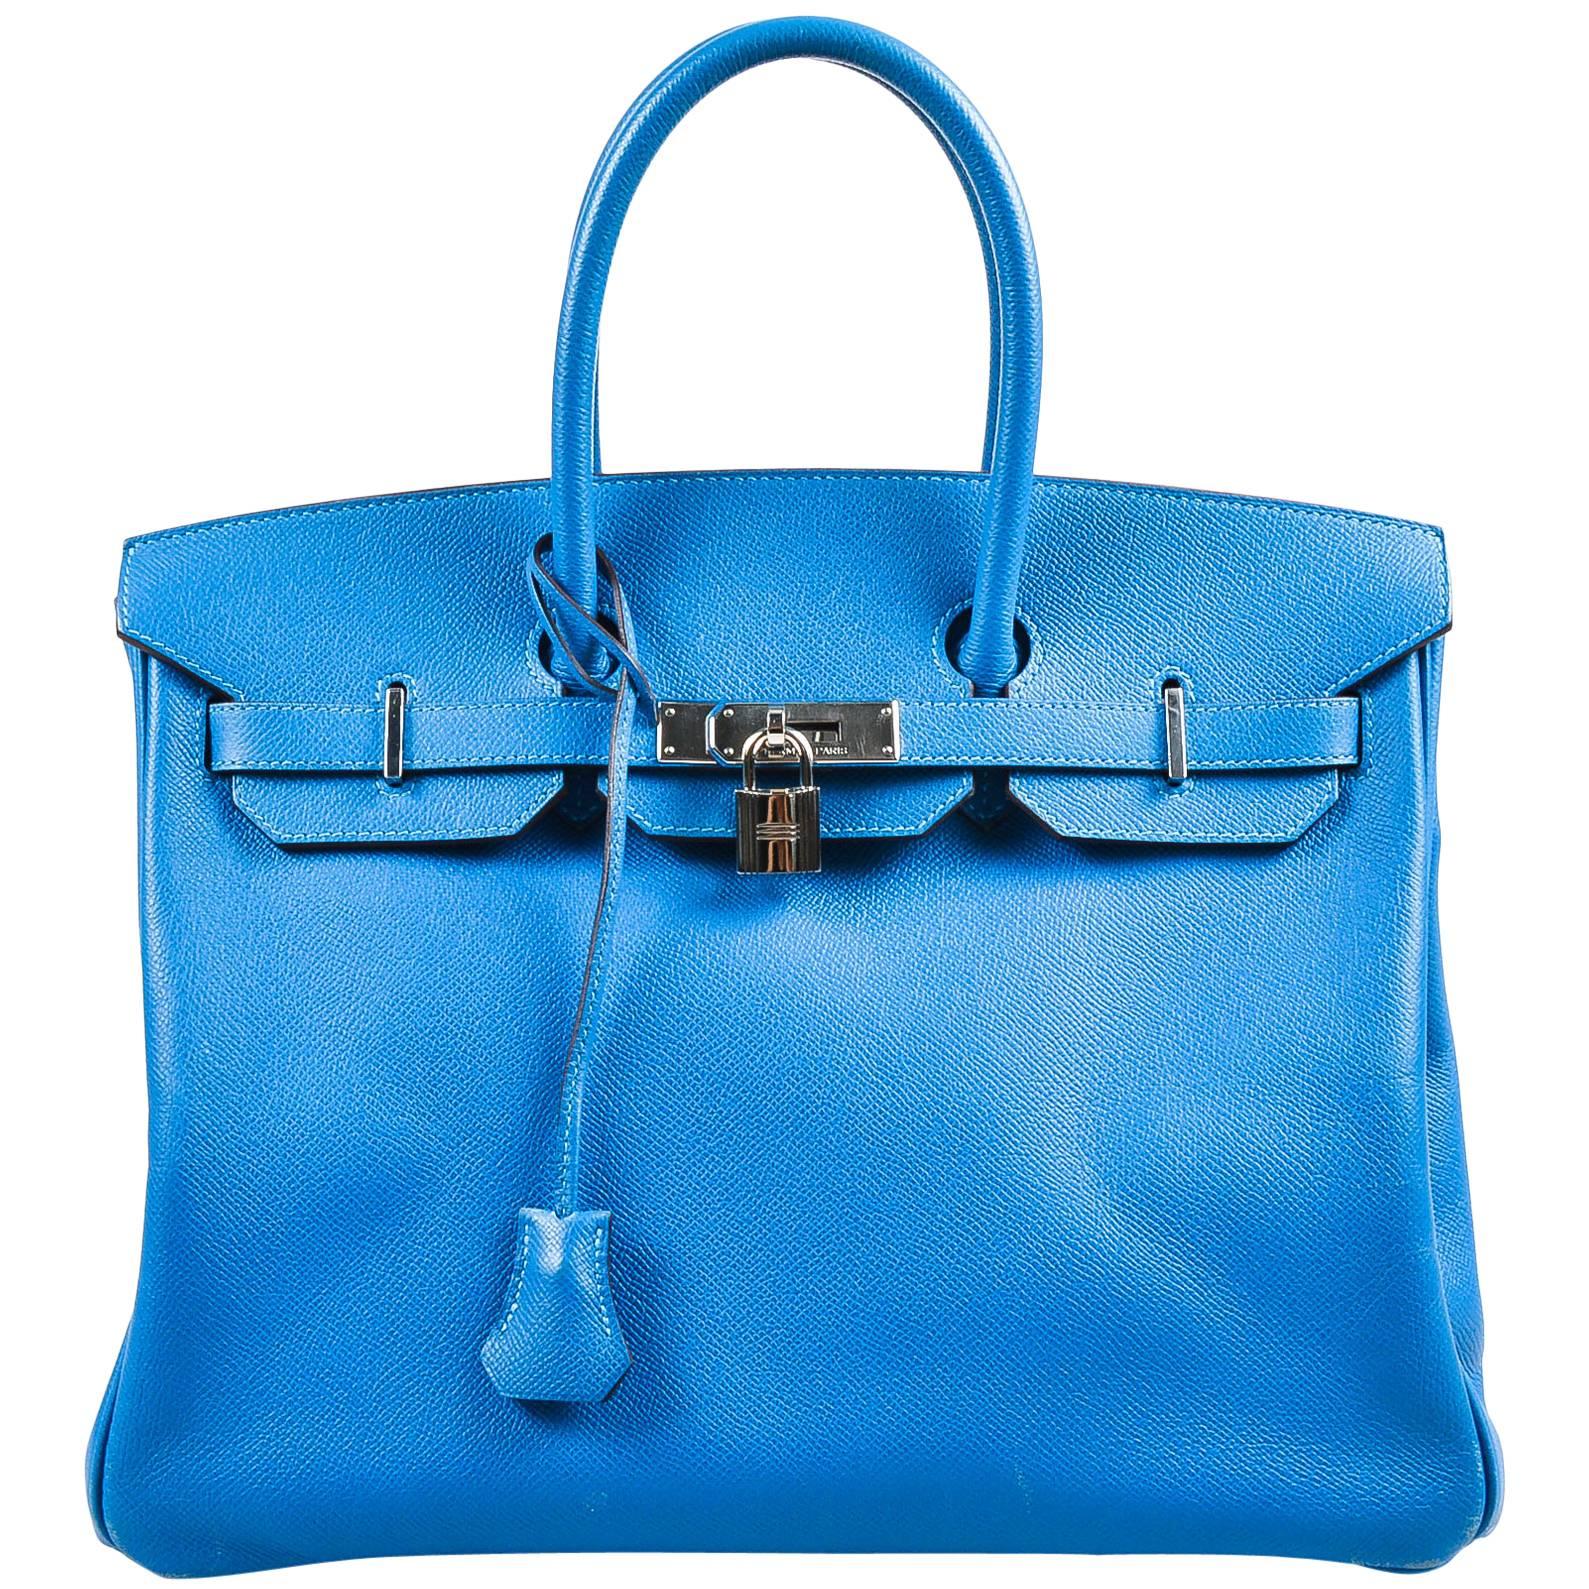 Hermes Bleu de Galice Epsom Leather Palladium Hardware "Birkin" 35 cm Tote Bag For Sale